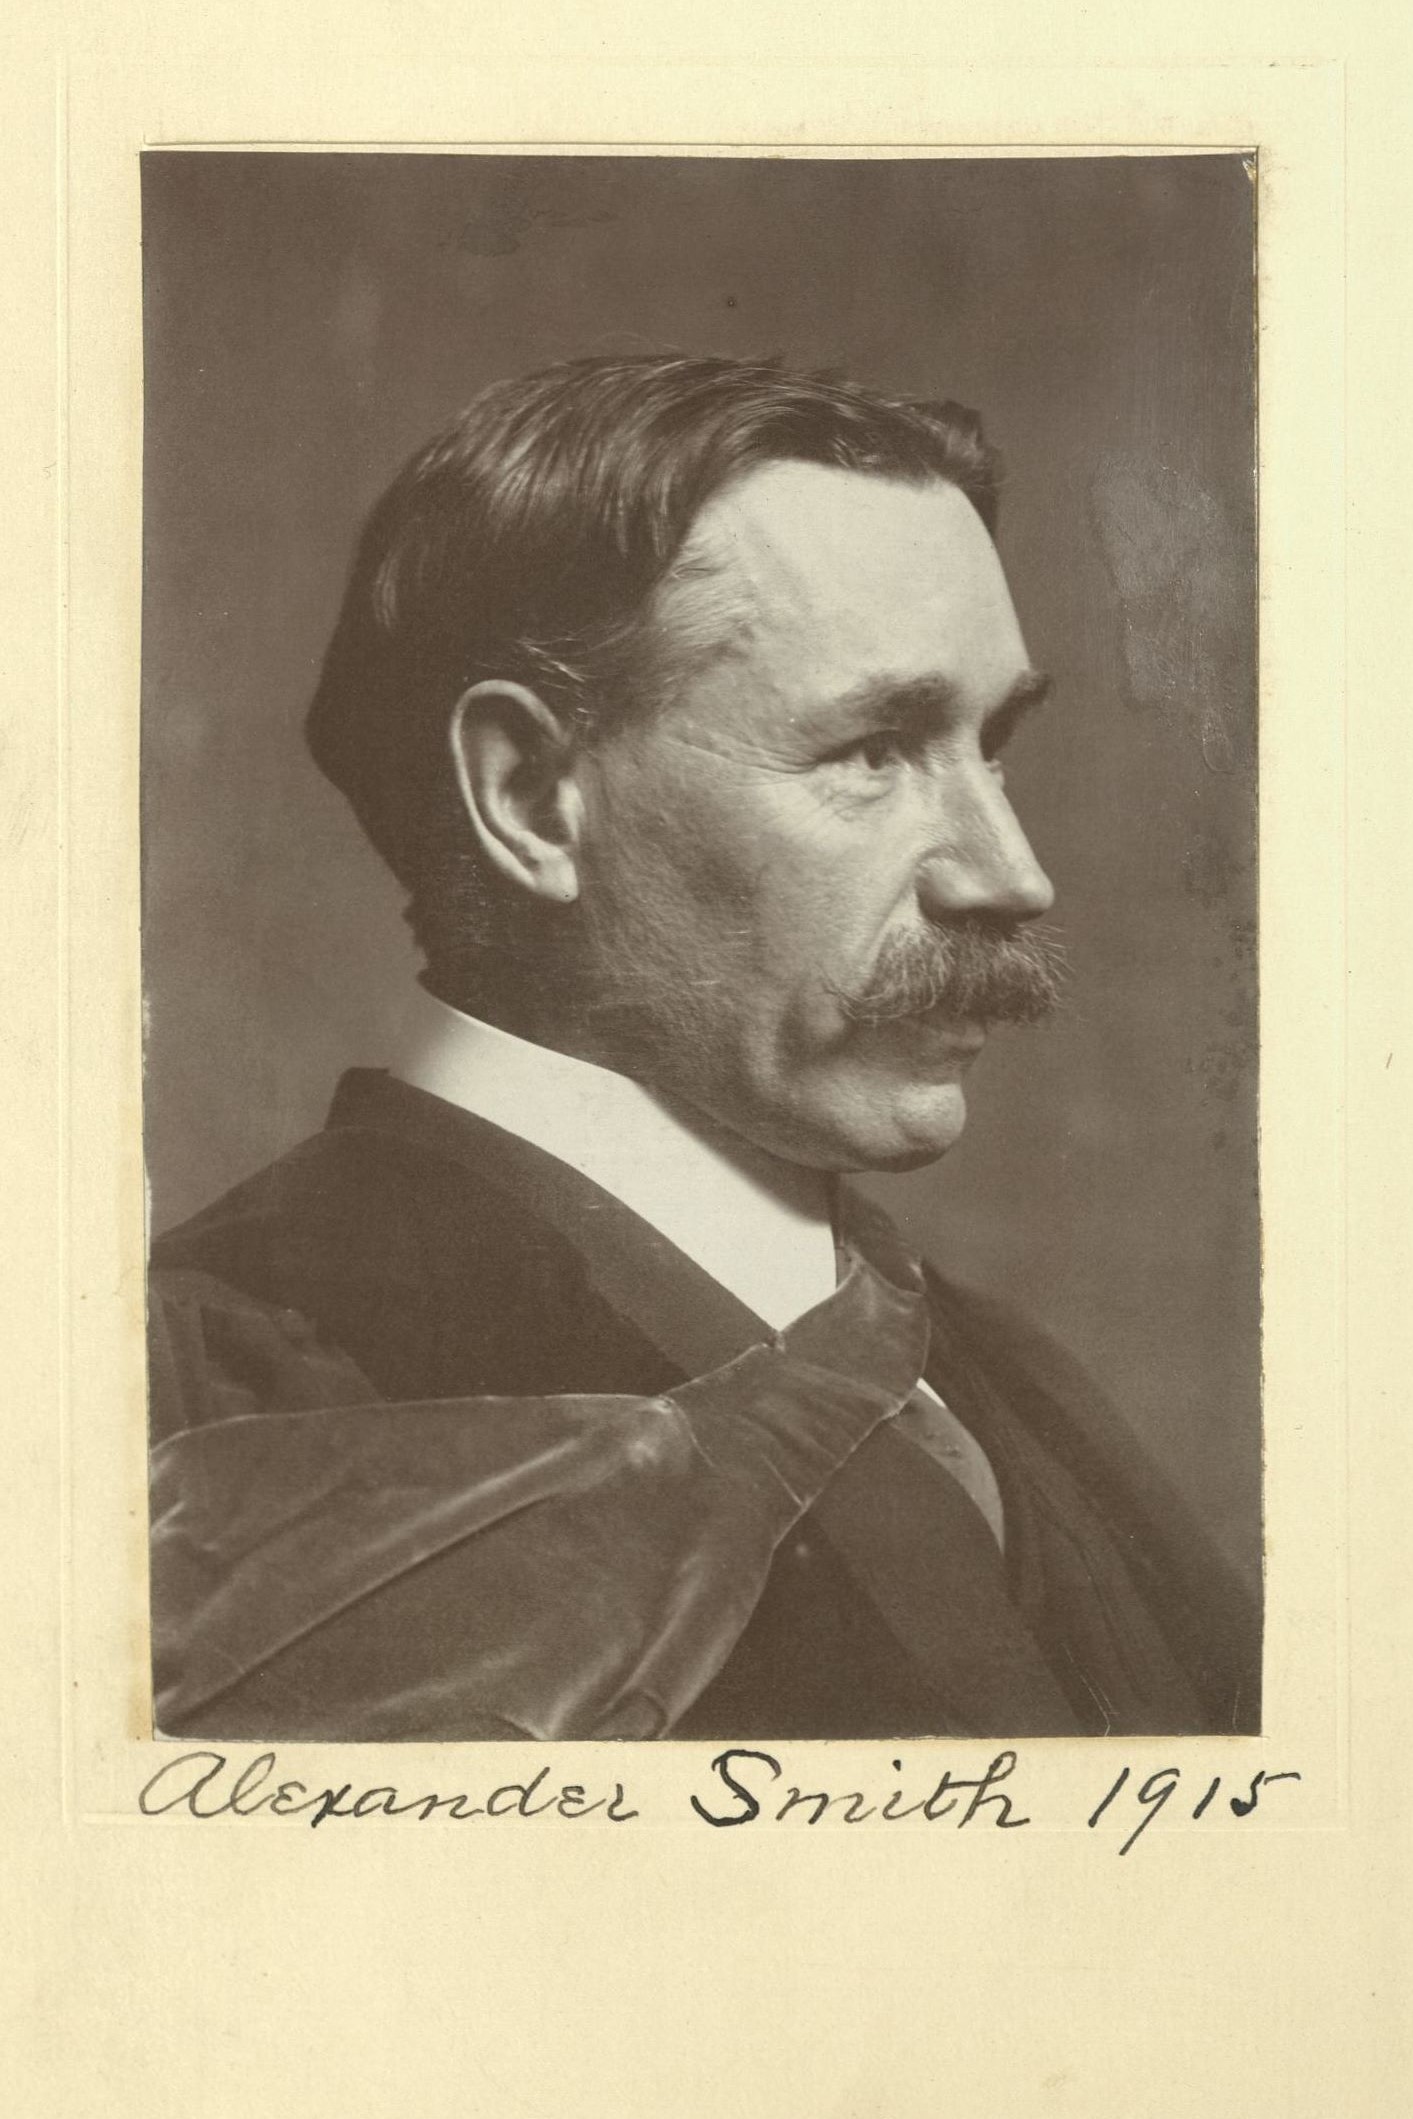 Member portrait of Alexander Smith